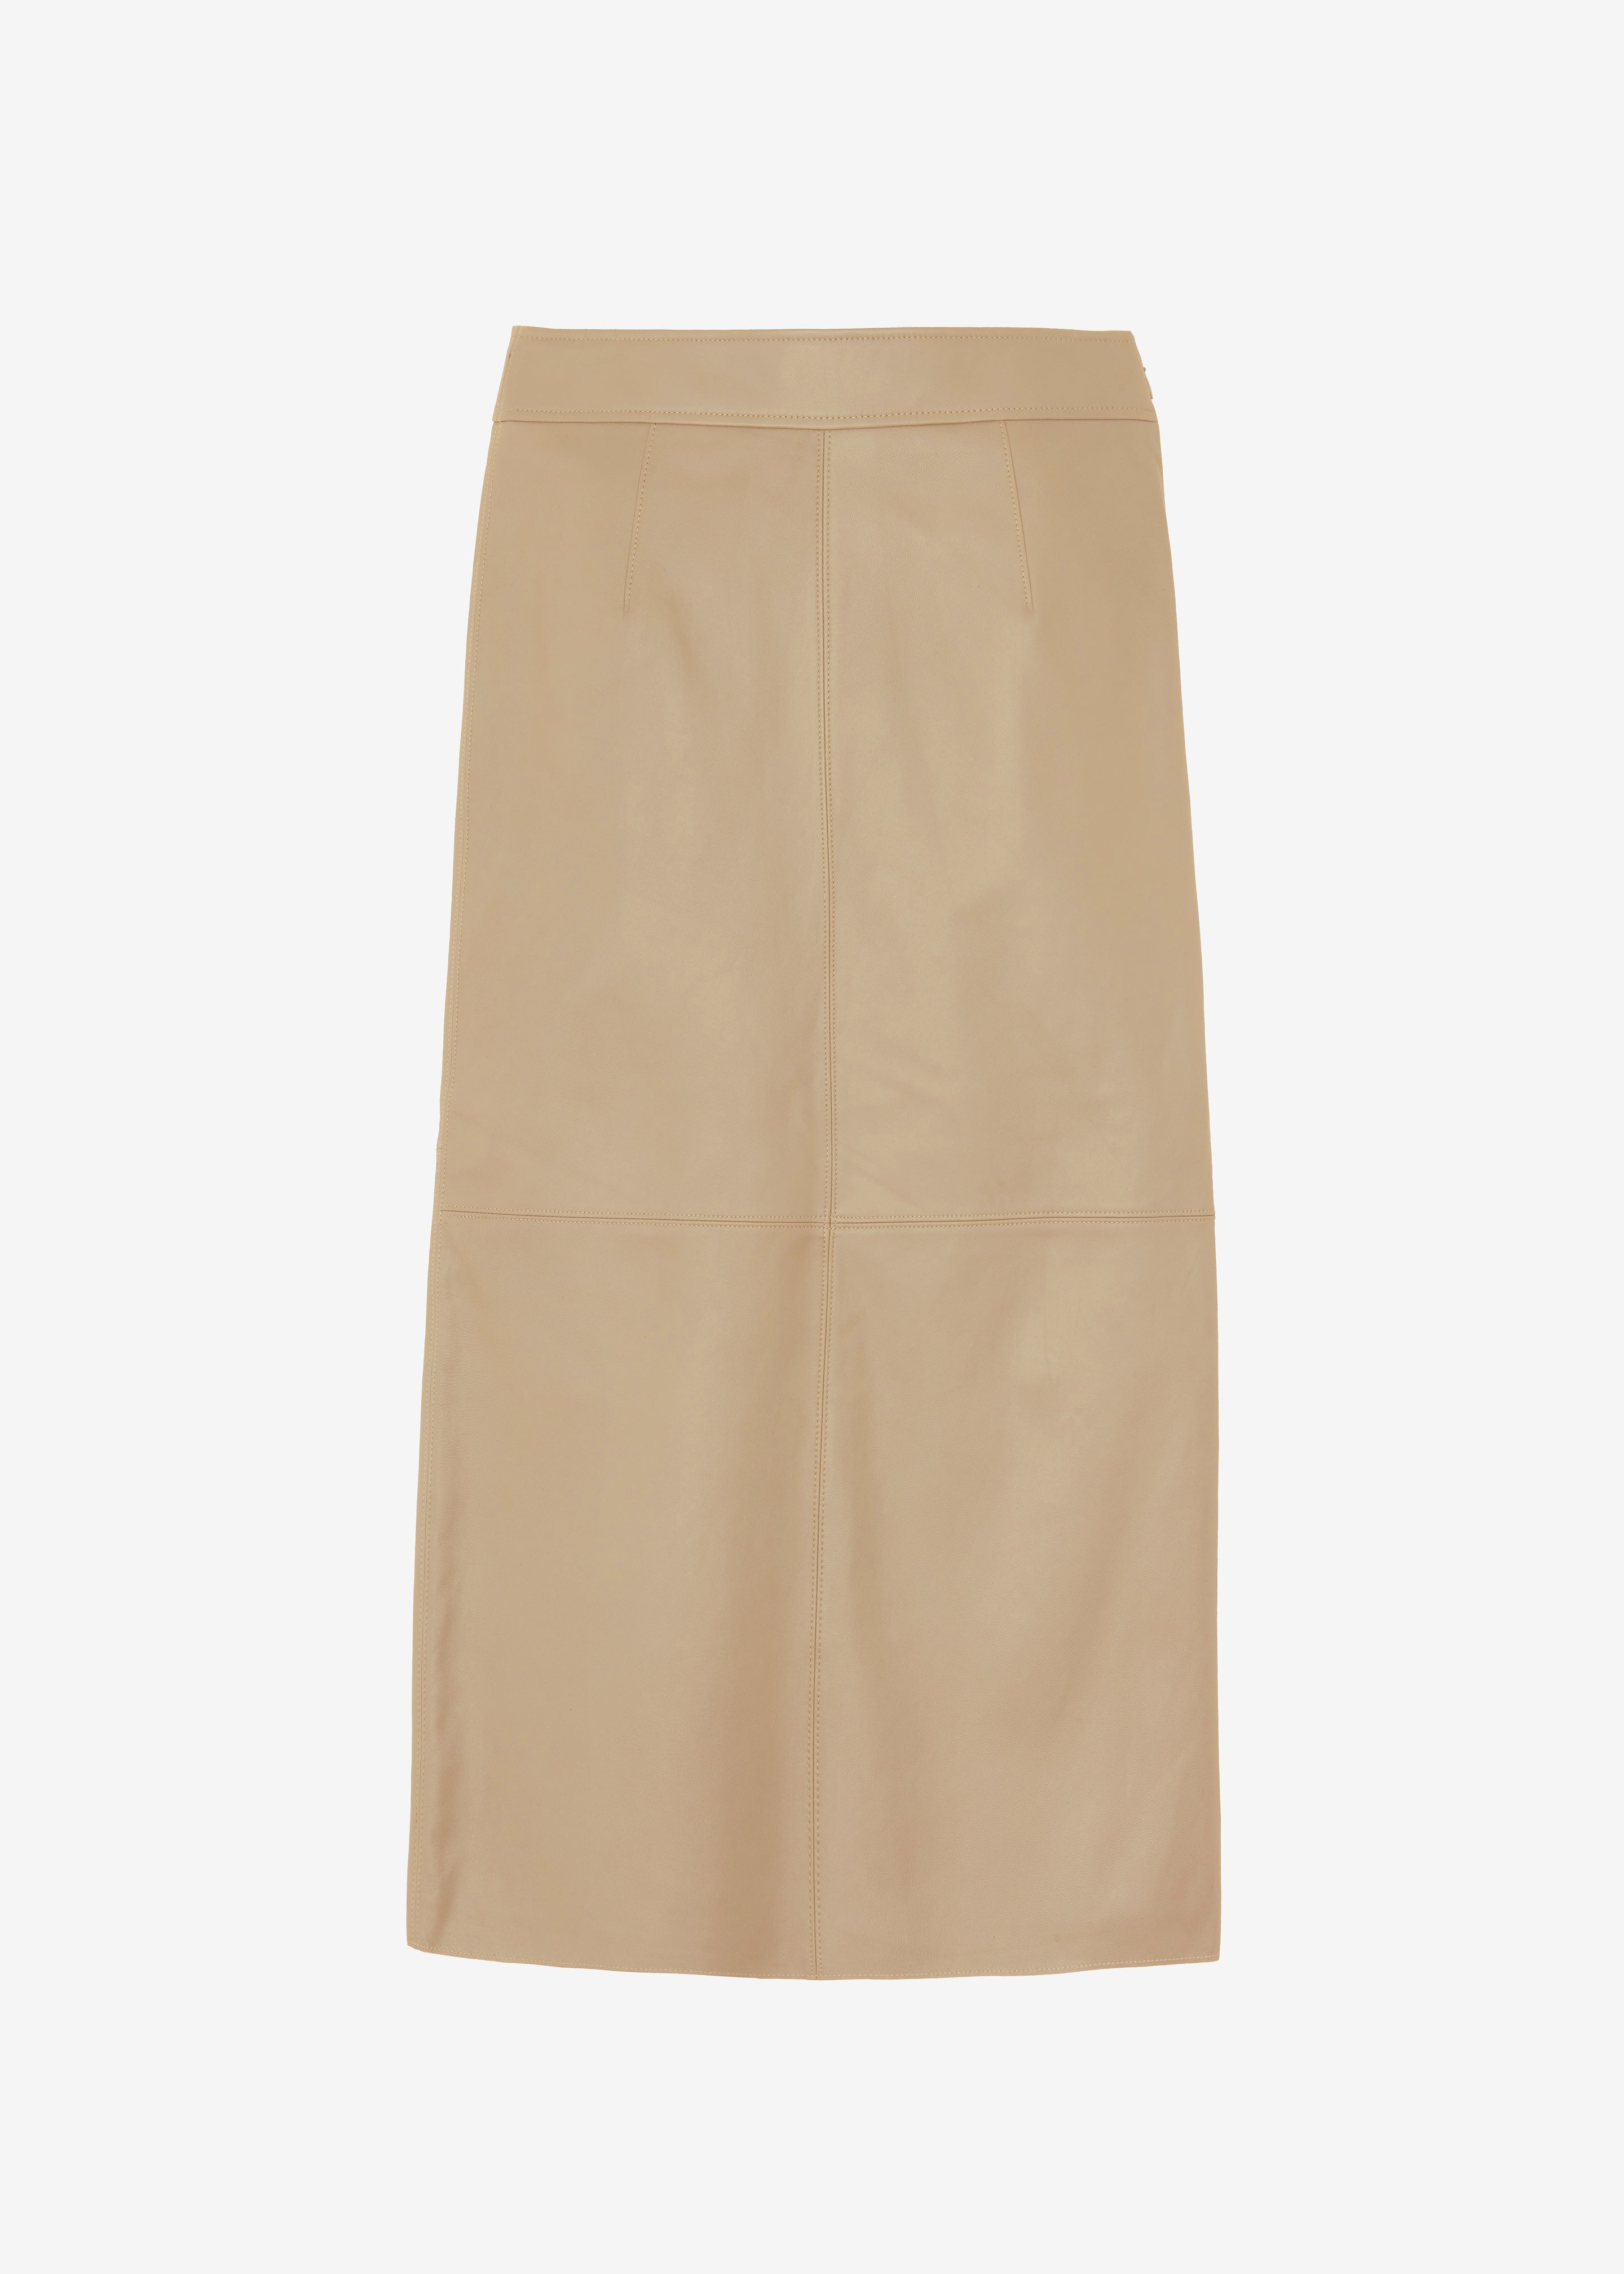 Heather Leather Pencil Skirt - Beige - 7